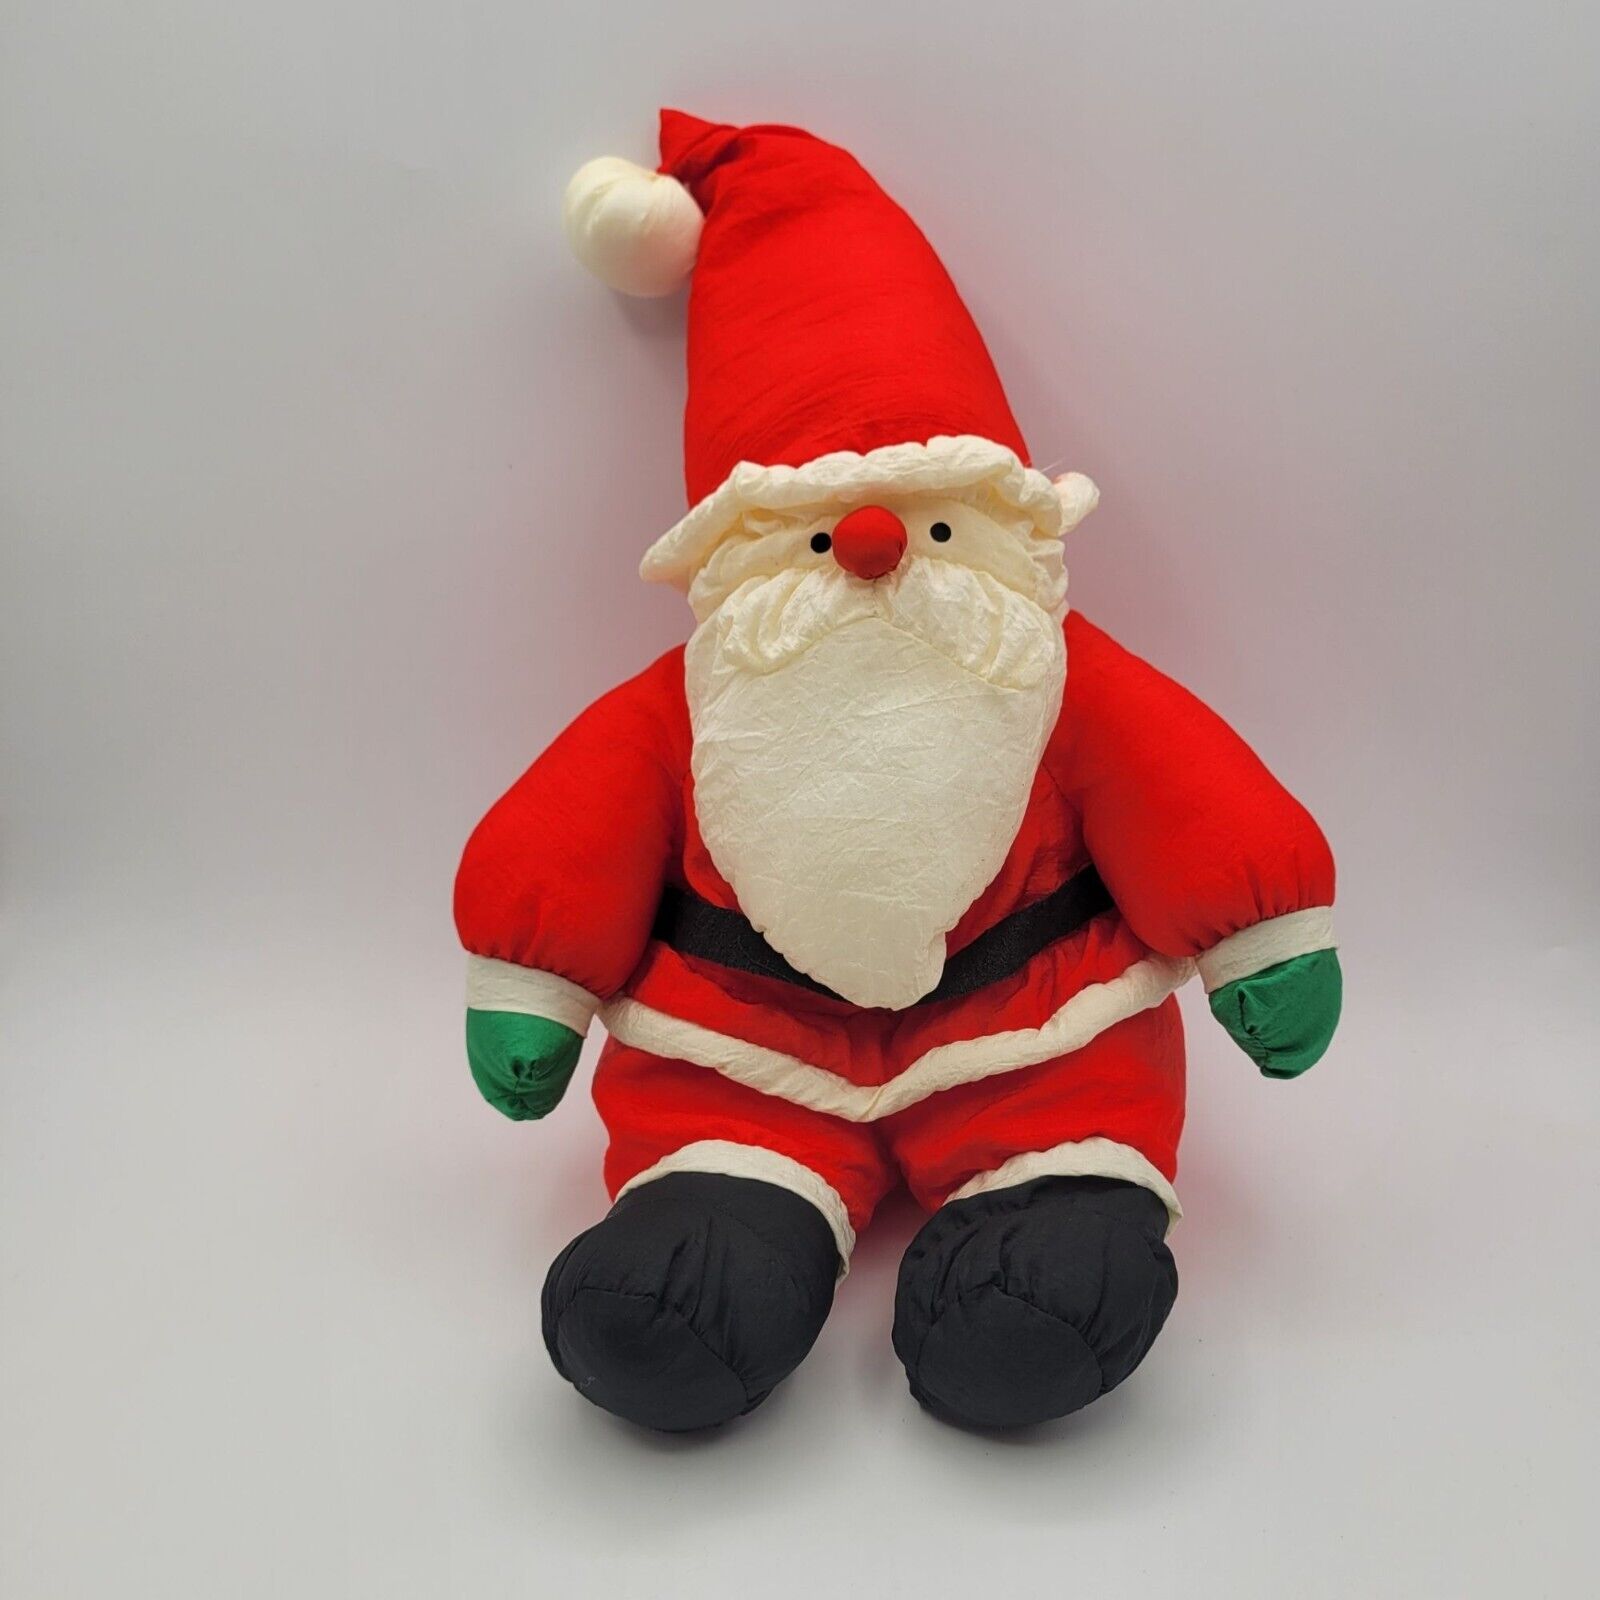 Vintage Department 56 Santa Clause Nylon Plush Stuffed Animal Christmas Decor